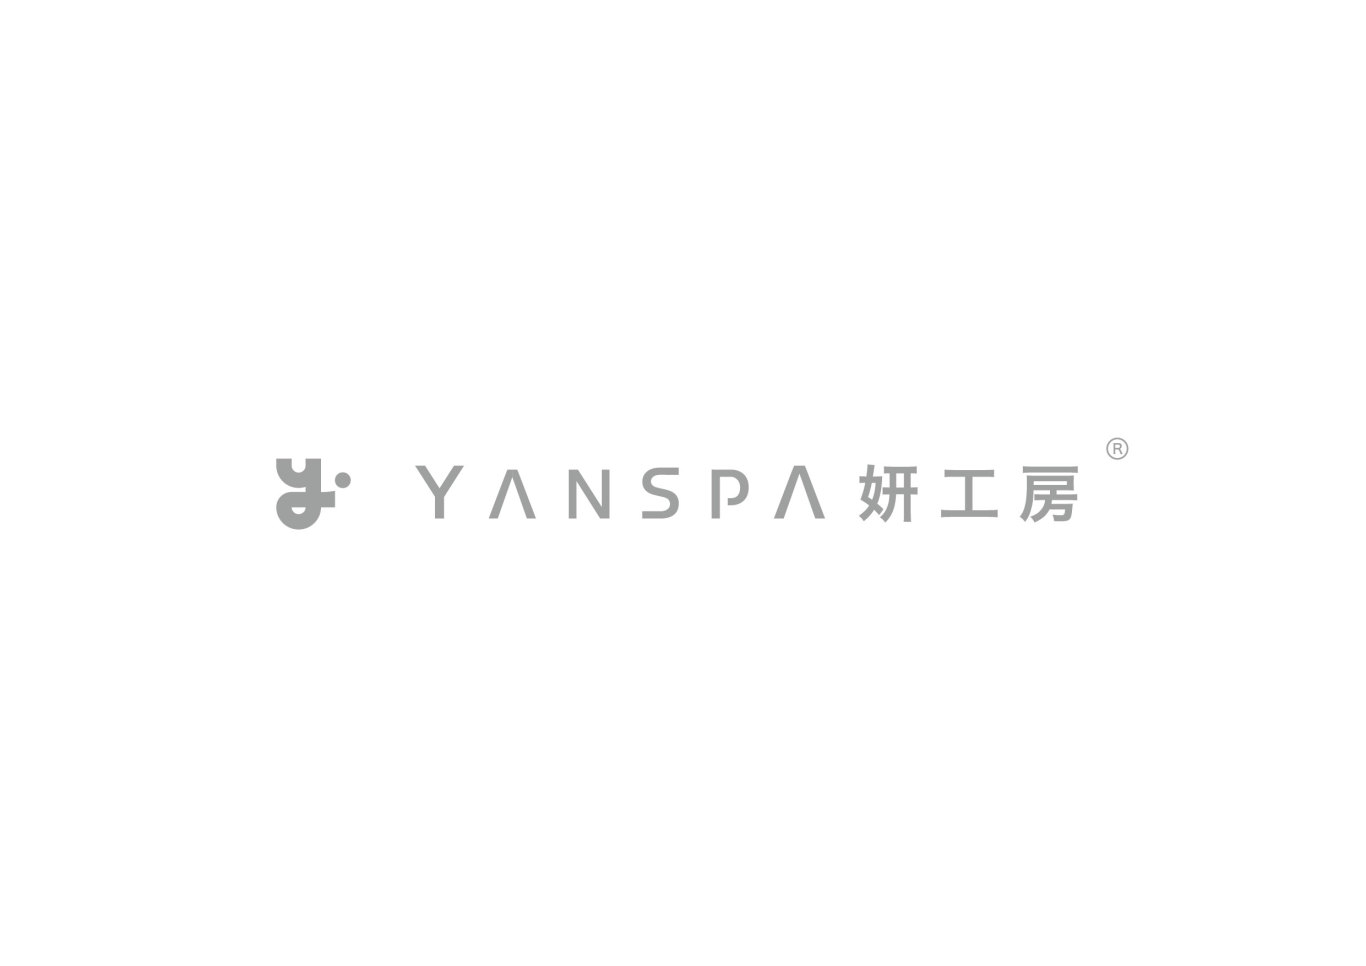 Yanspa妍工房美容连锁品牌VI形象设计图35